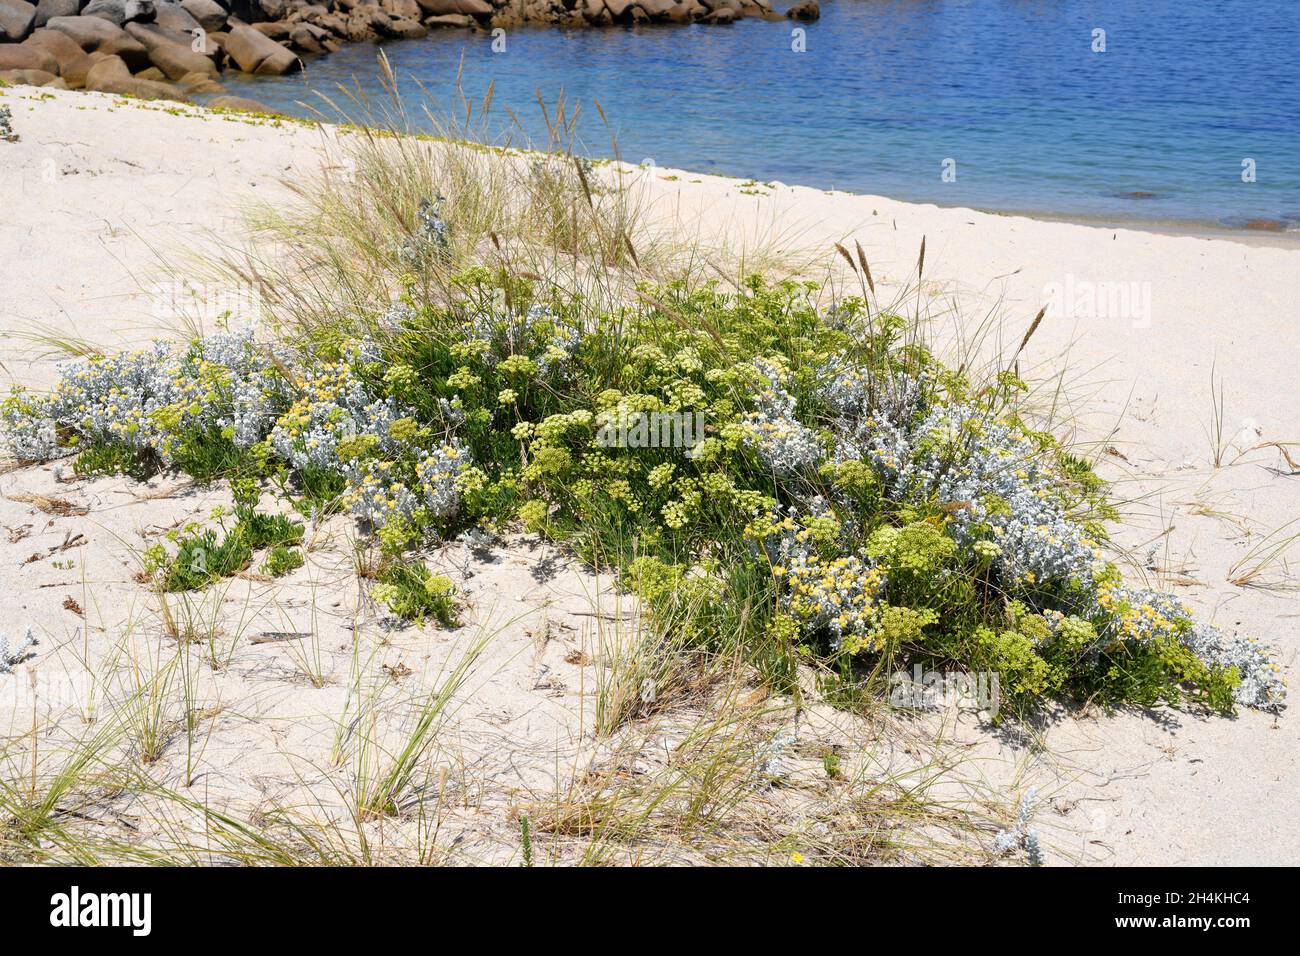 Sea fennel (Crithmum maritimum), cotton weed plant (Otanthus maritimus) and European beachgrass (Ammophila arenaria) on a Galician beach. This photo Stock Photo